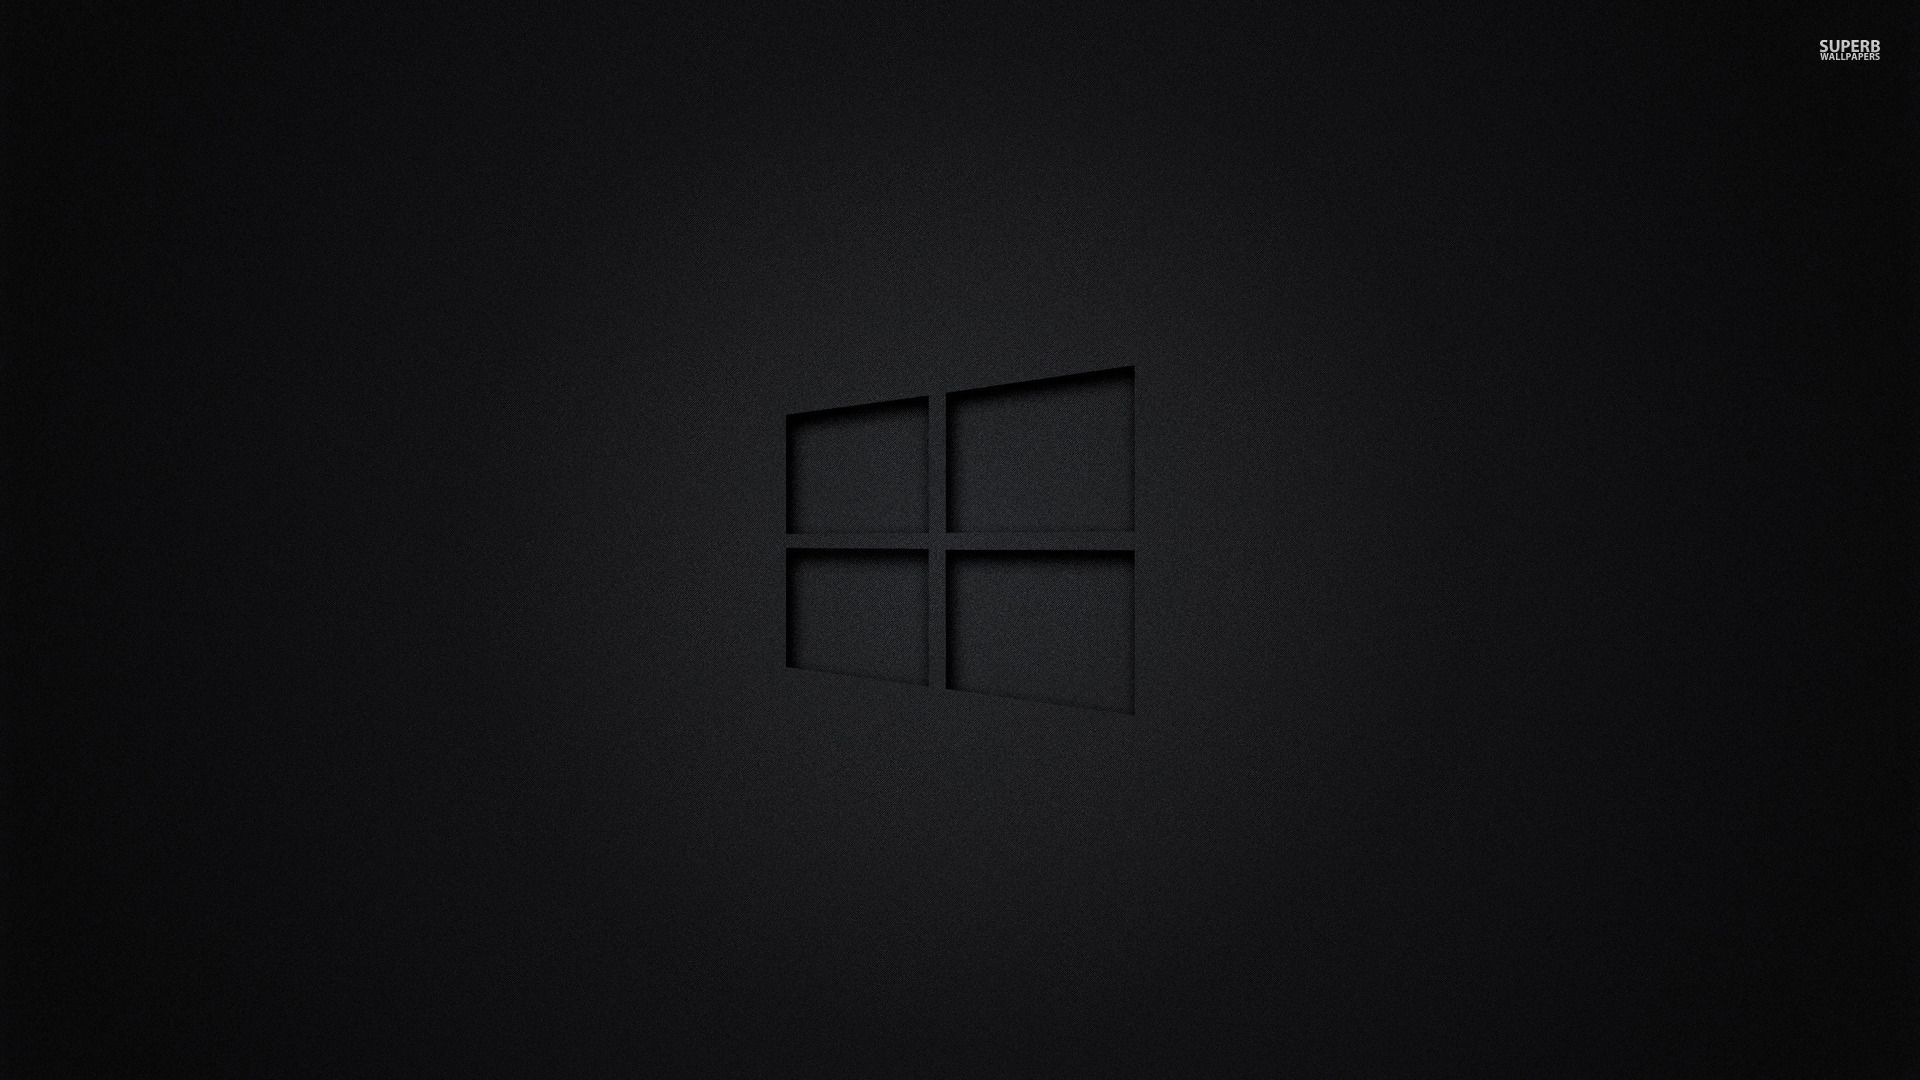 Windows 10 transparent logo on black wallpaper - Computer ...